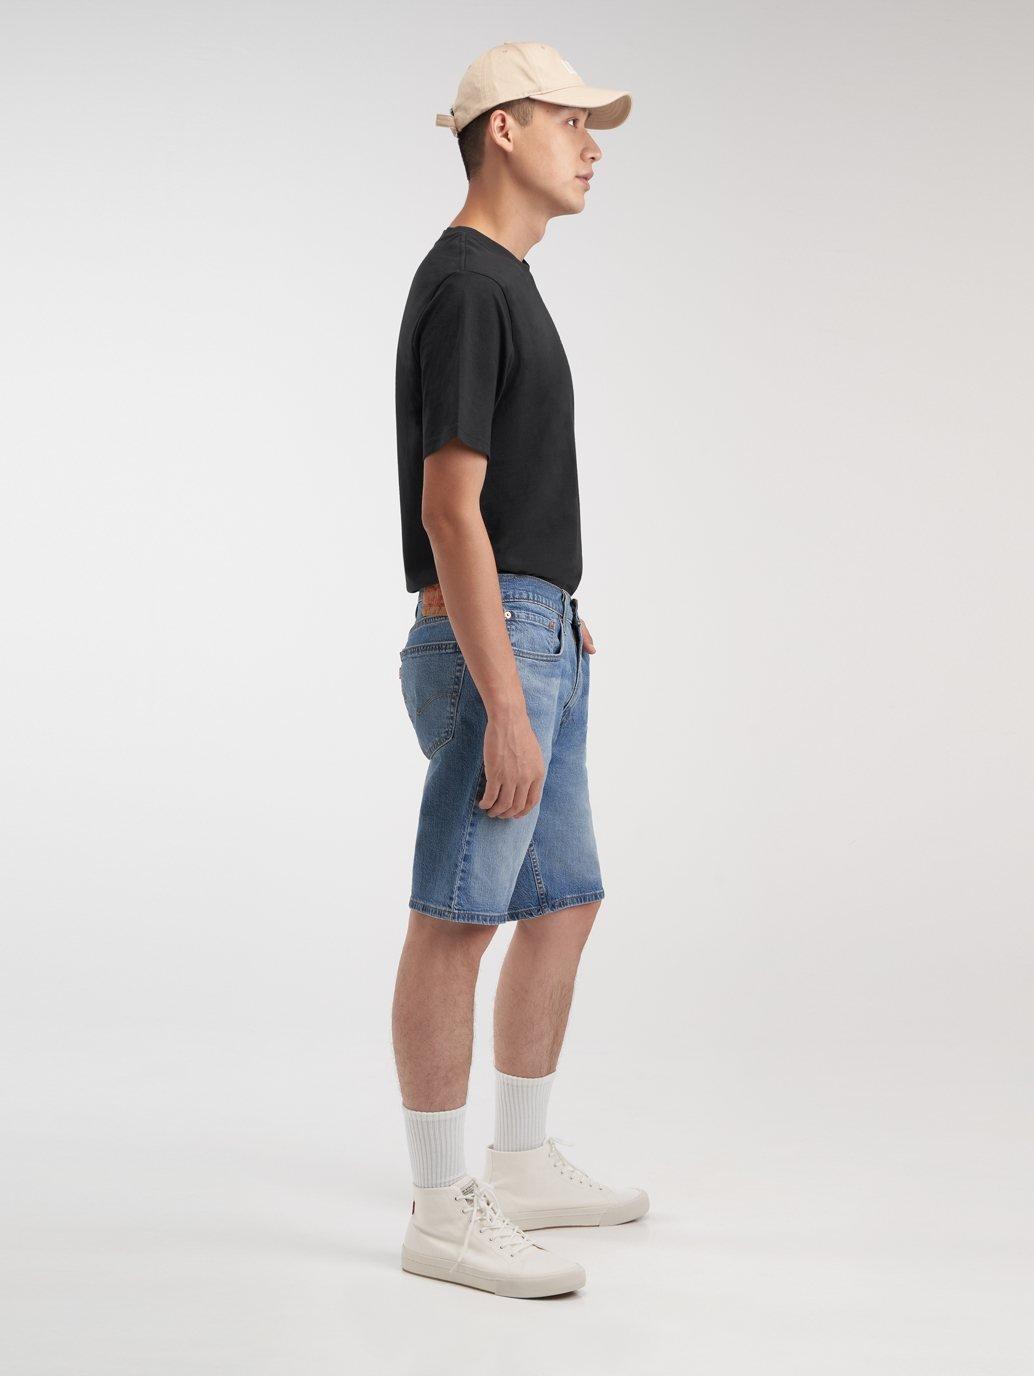 levis singapore mens standard jean shorts 398640006 03 Side